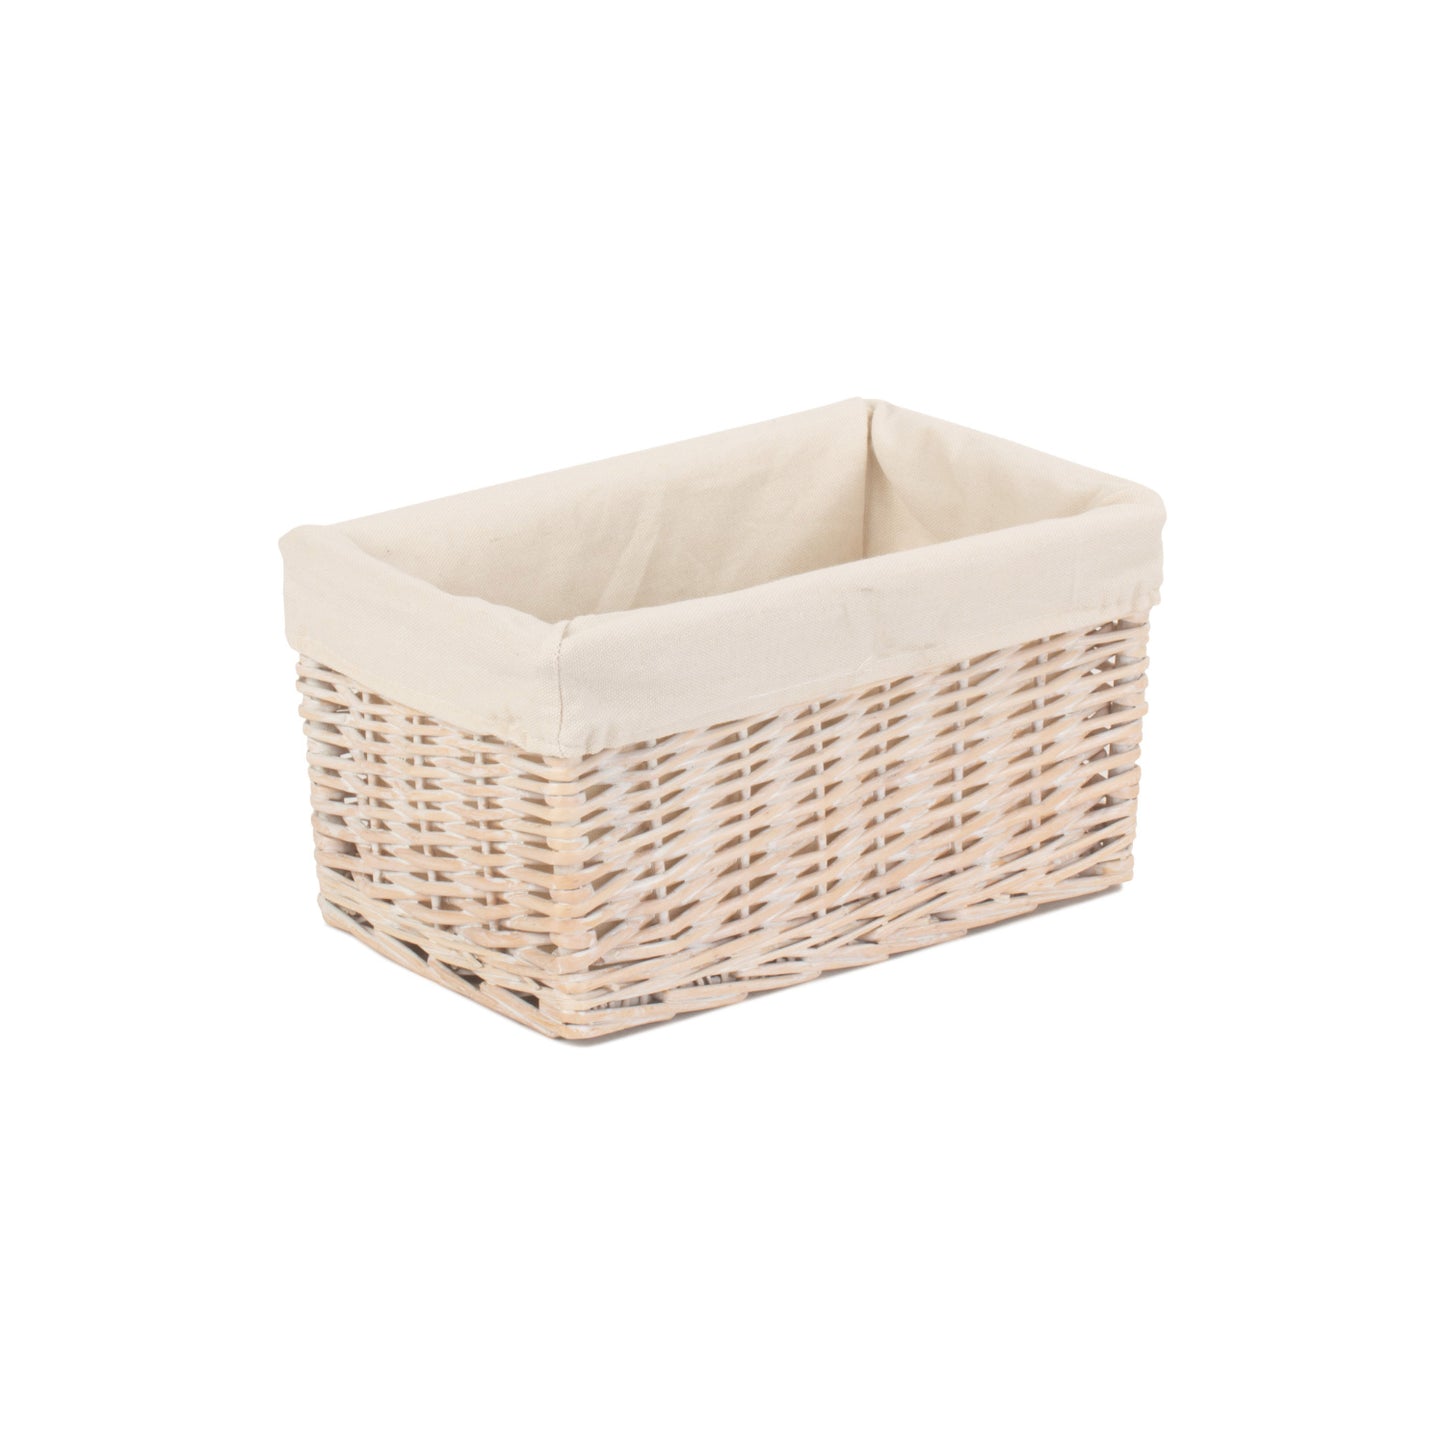 Small White Wash Storage Basket With White Lining